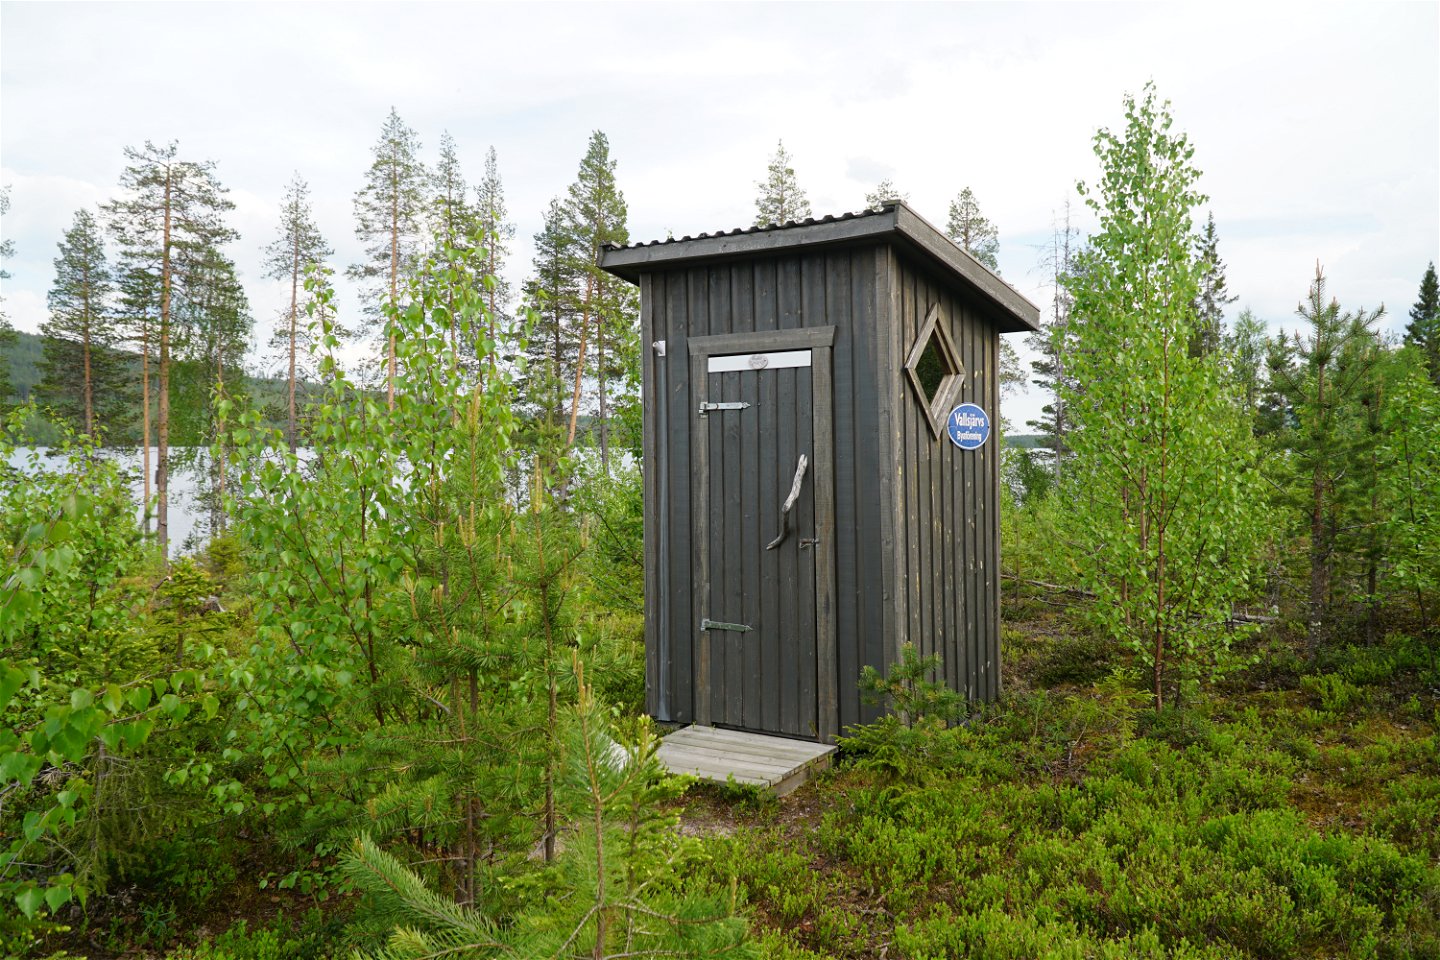 The outdoor toilet